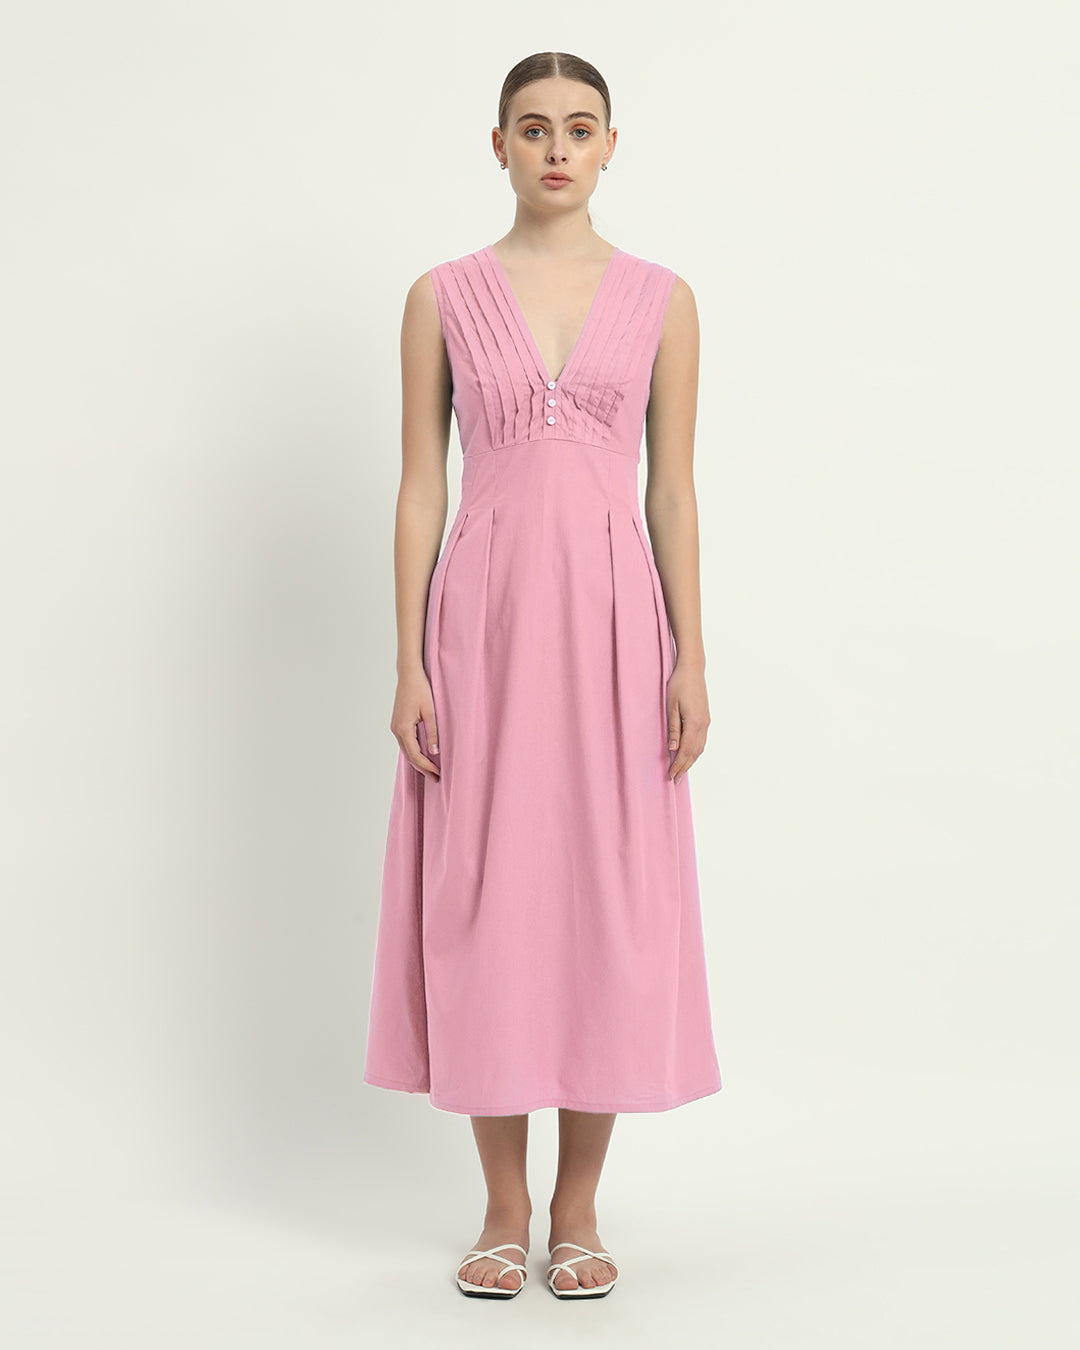 The Fondant Pink Mendoza Cotton Dress